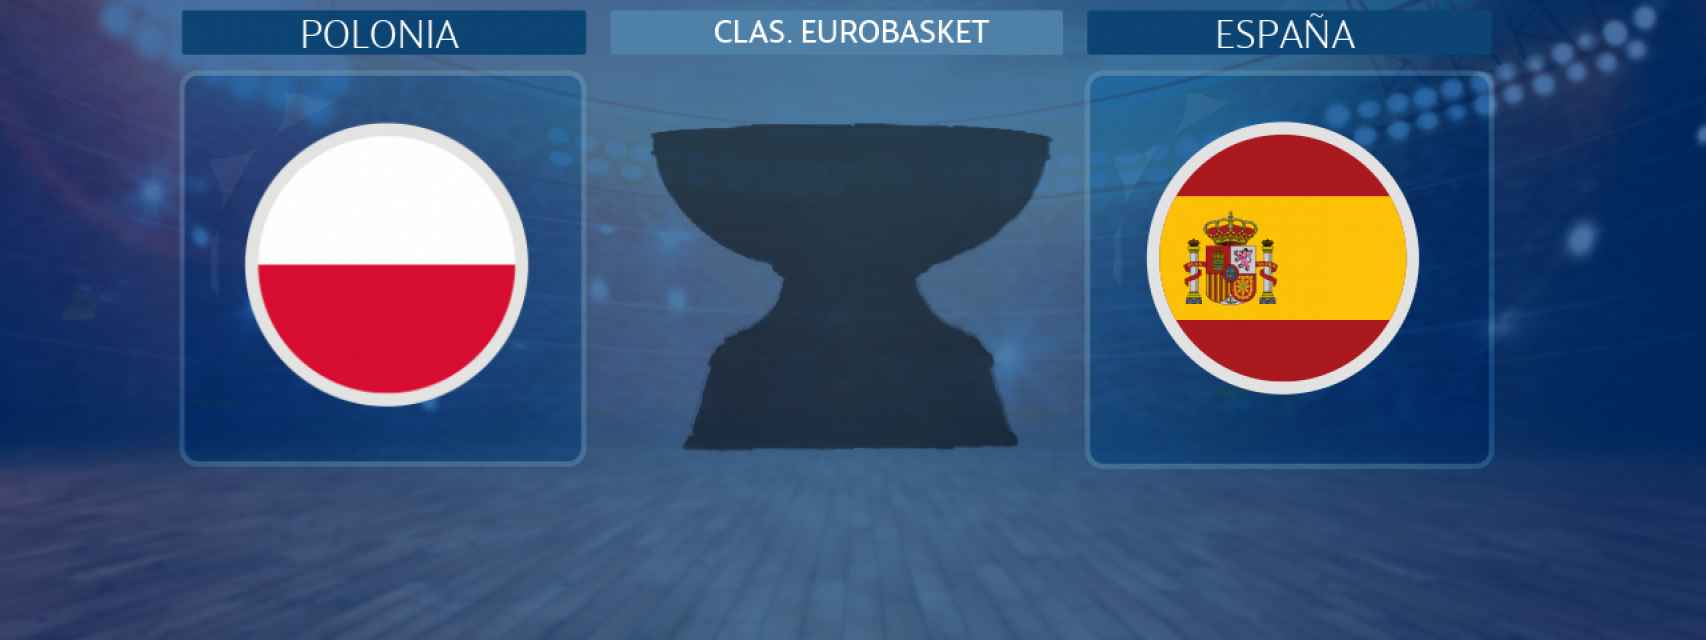 Polonia - España, partido de de clasificación para el Eurobasket